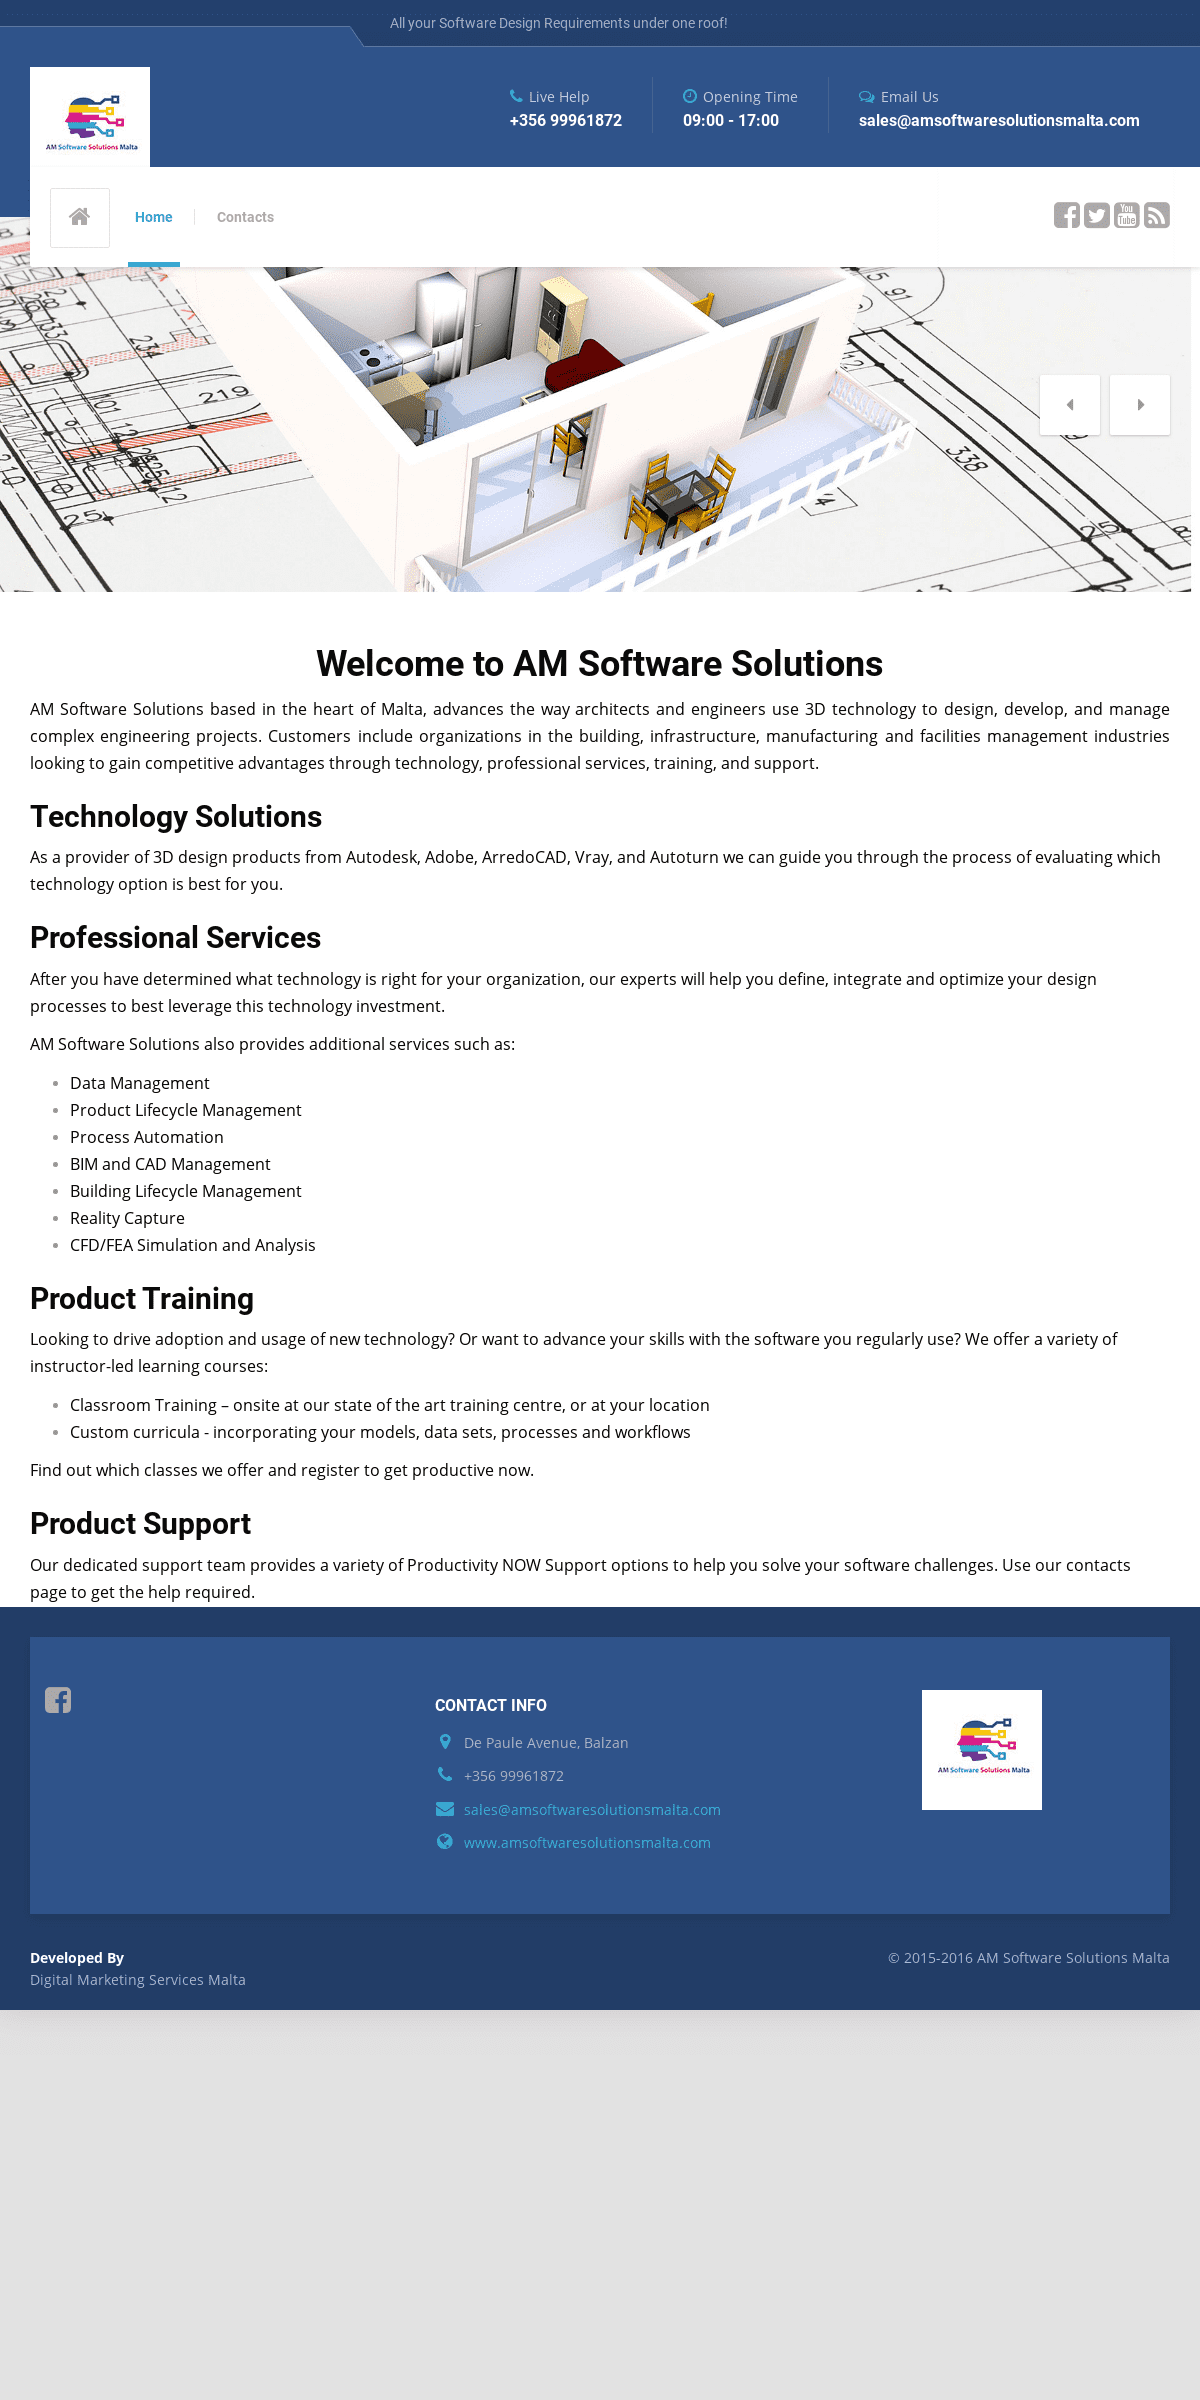 A complete backup of amsoftwaresolutionsmalta.com